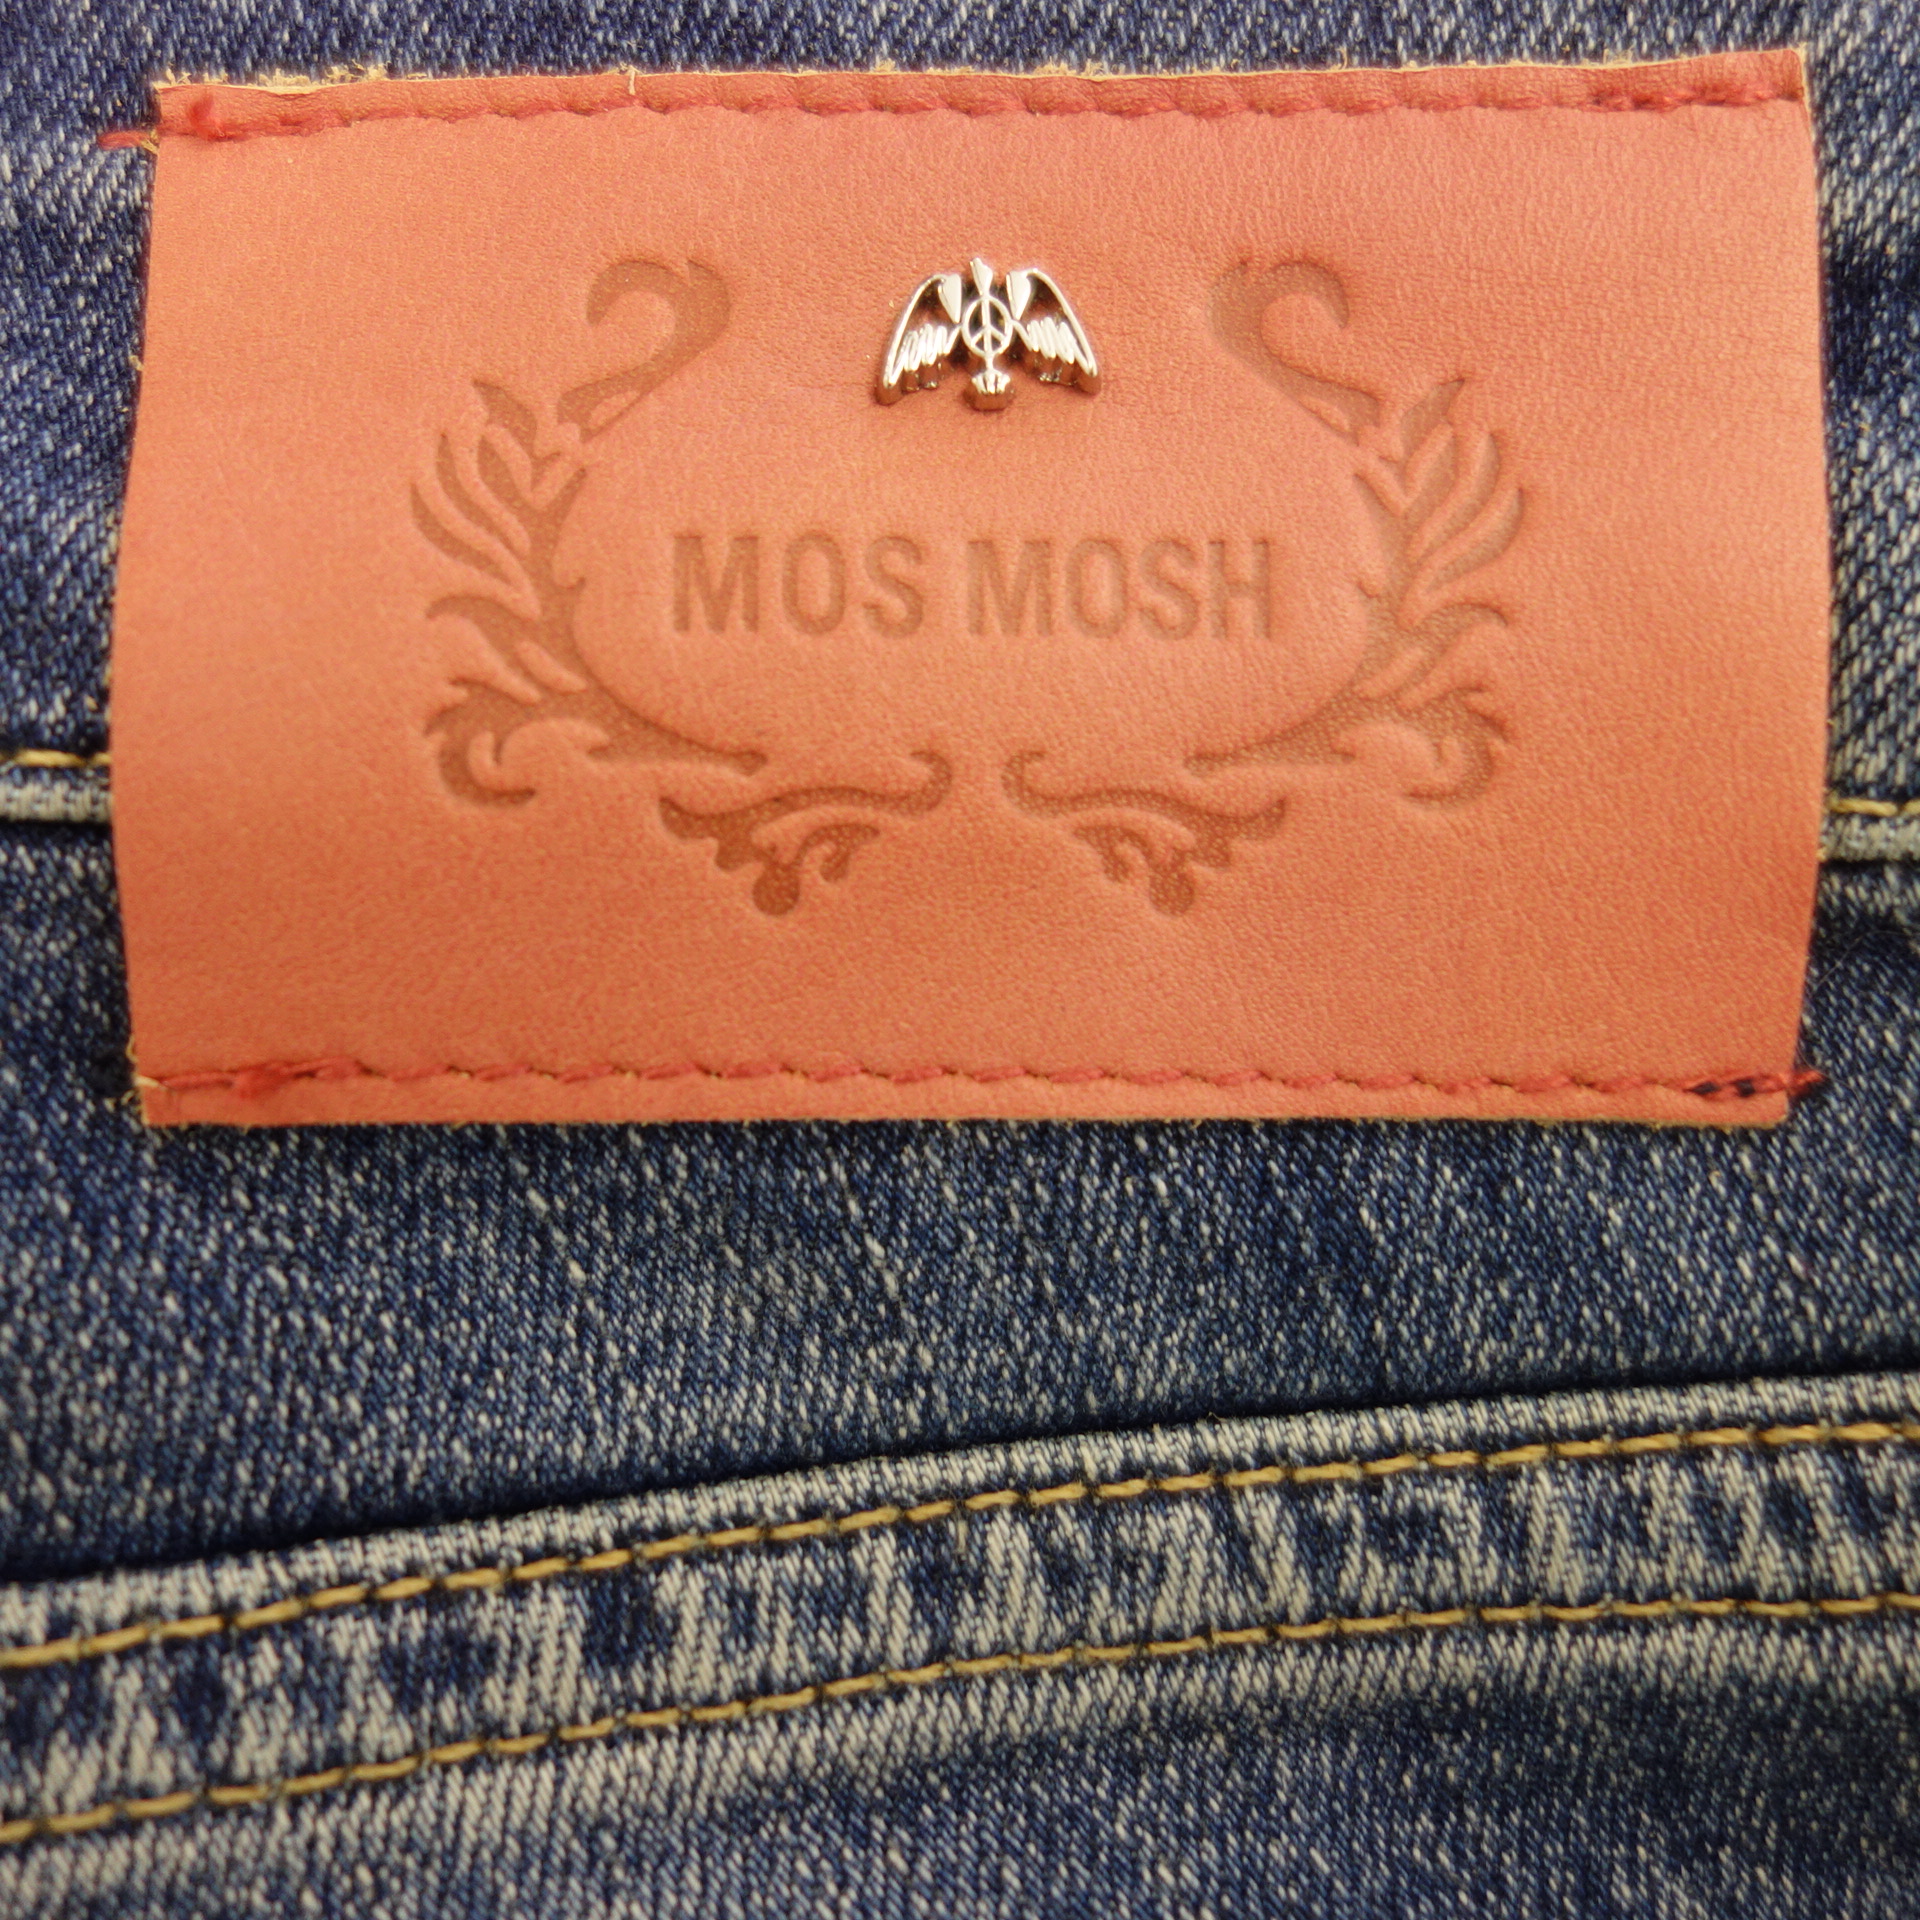 MOS MOSH Jeans Hose Blau Modell Sumner Re-Loved Straight